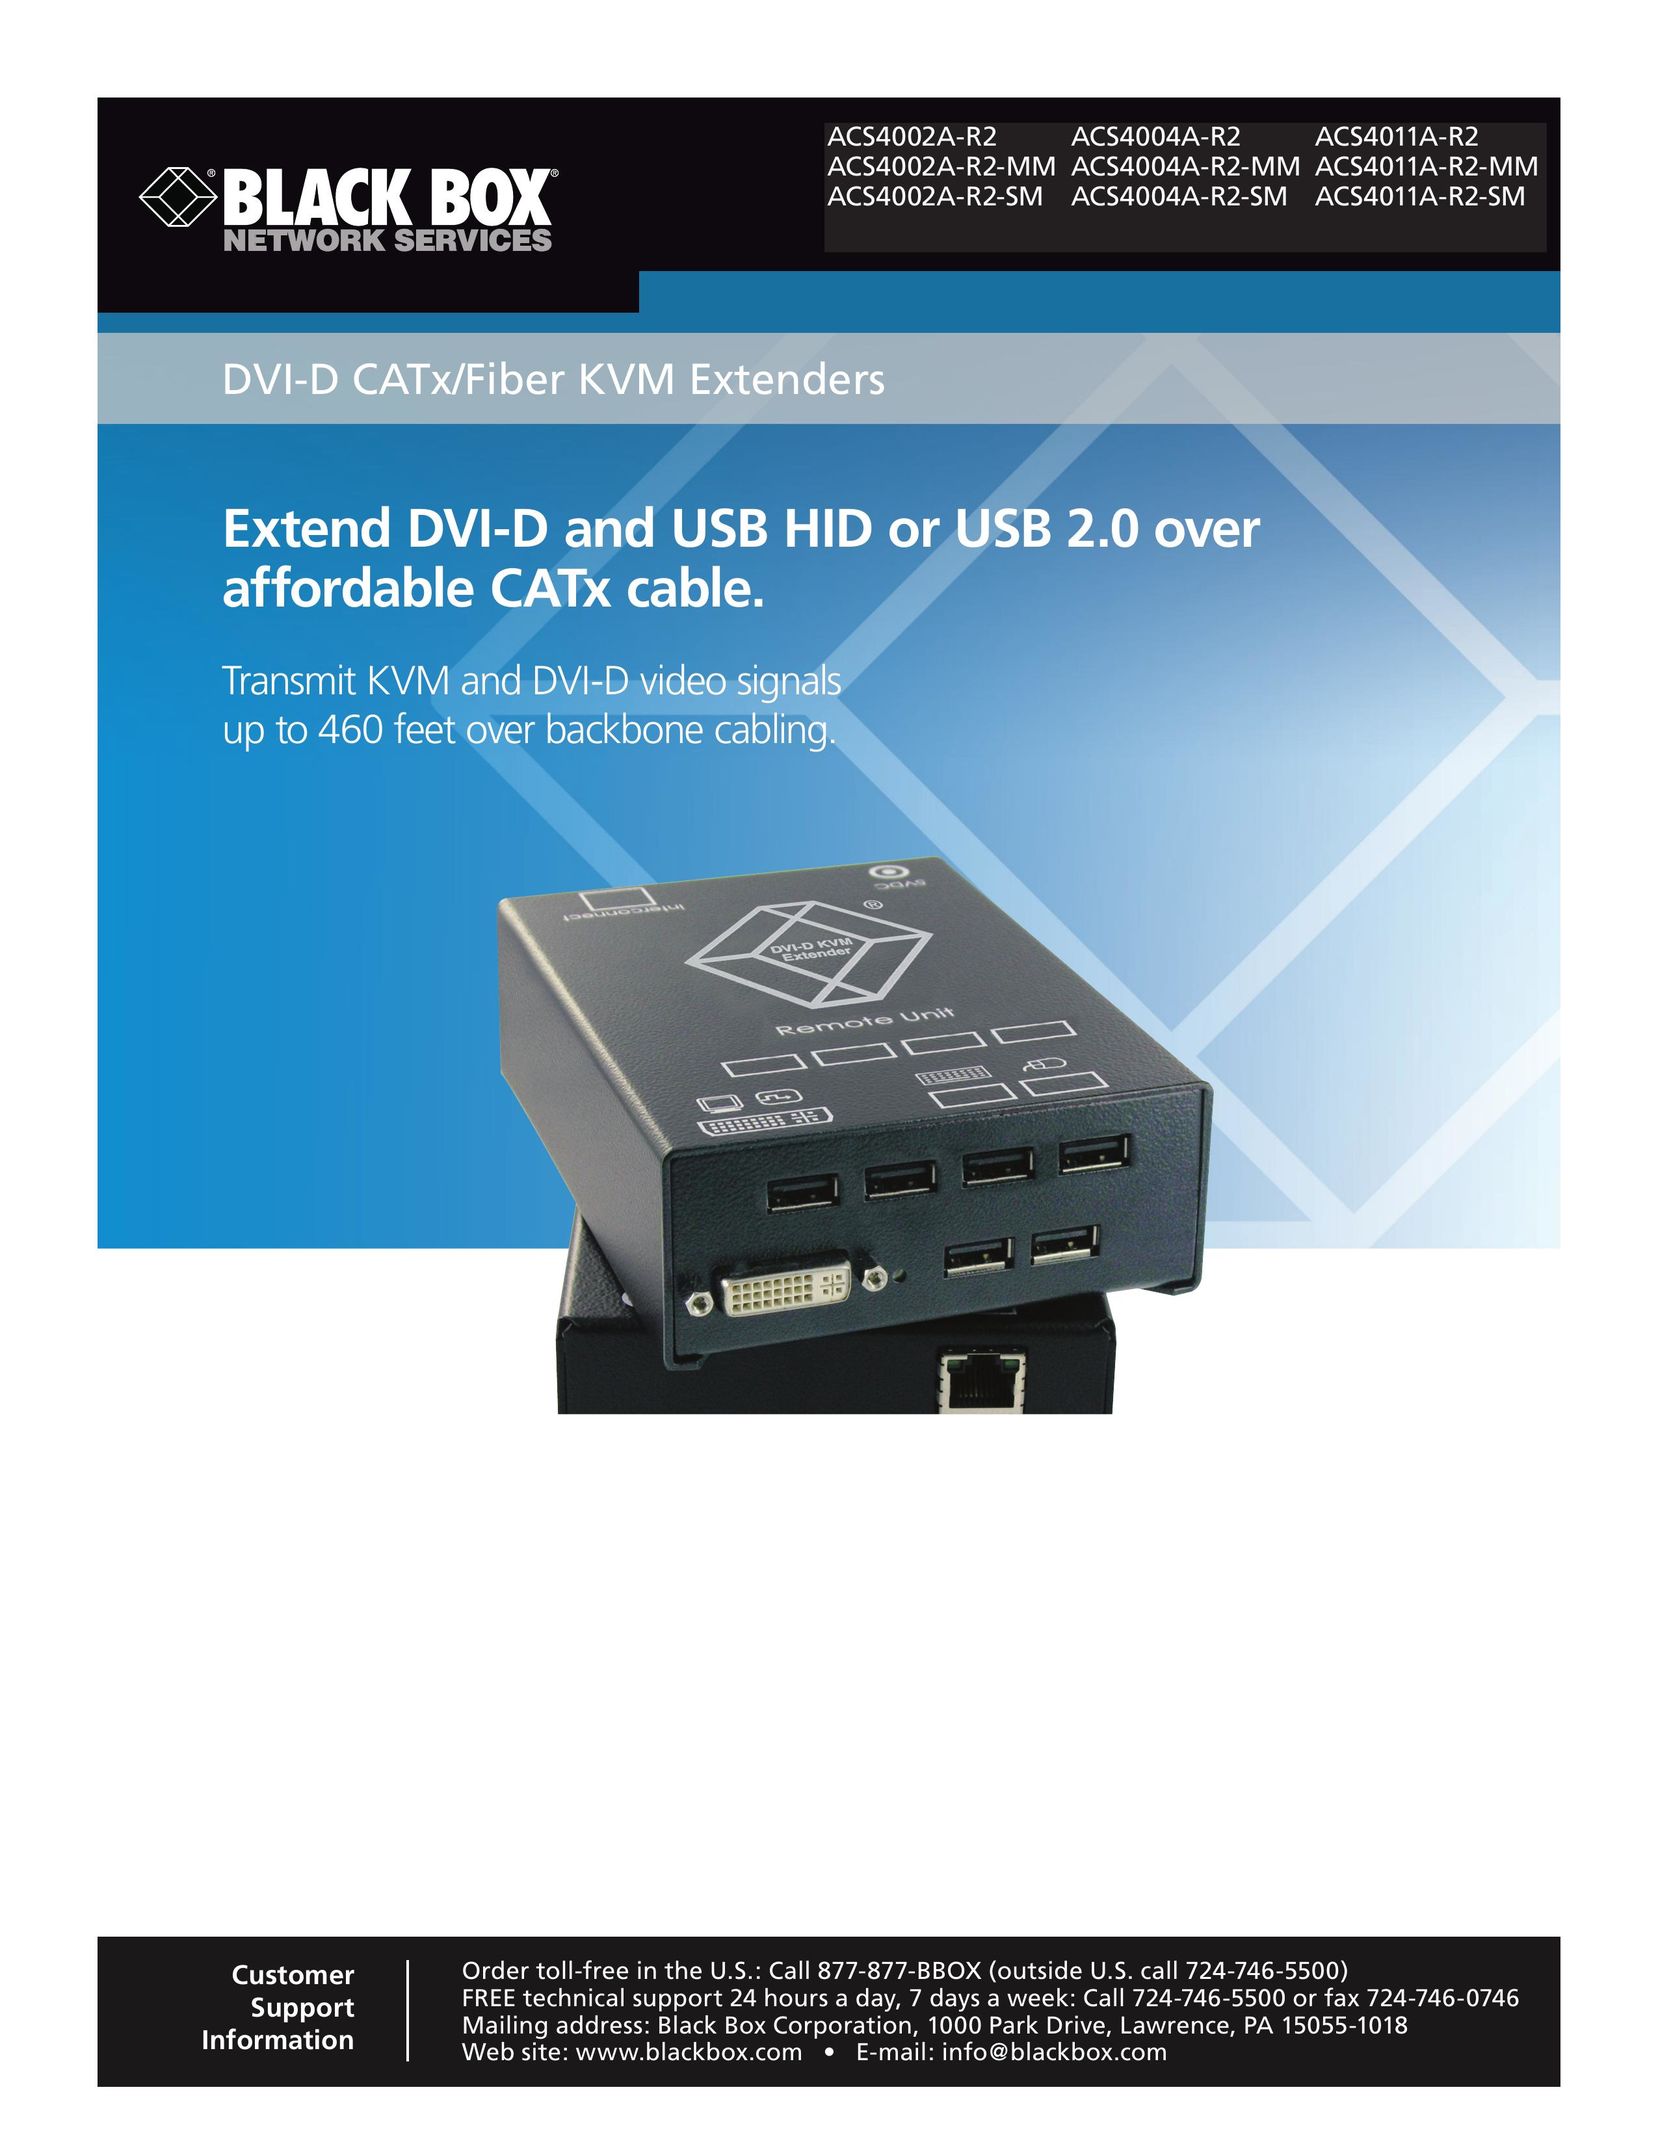 Black Box ACS4011A-R2-MM Network Hardware User Manual